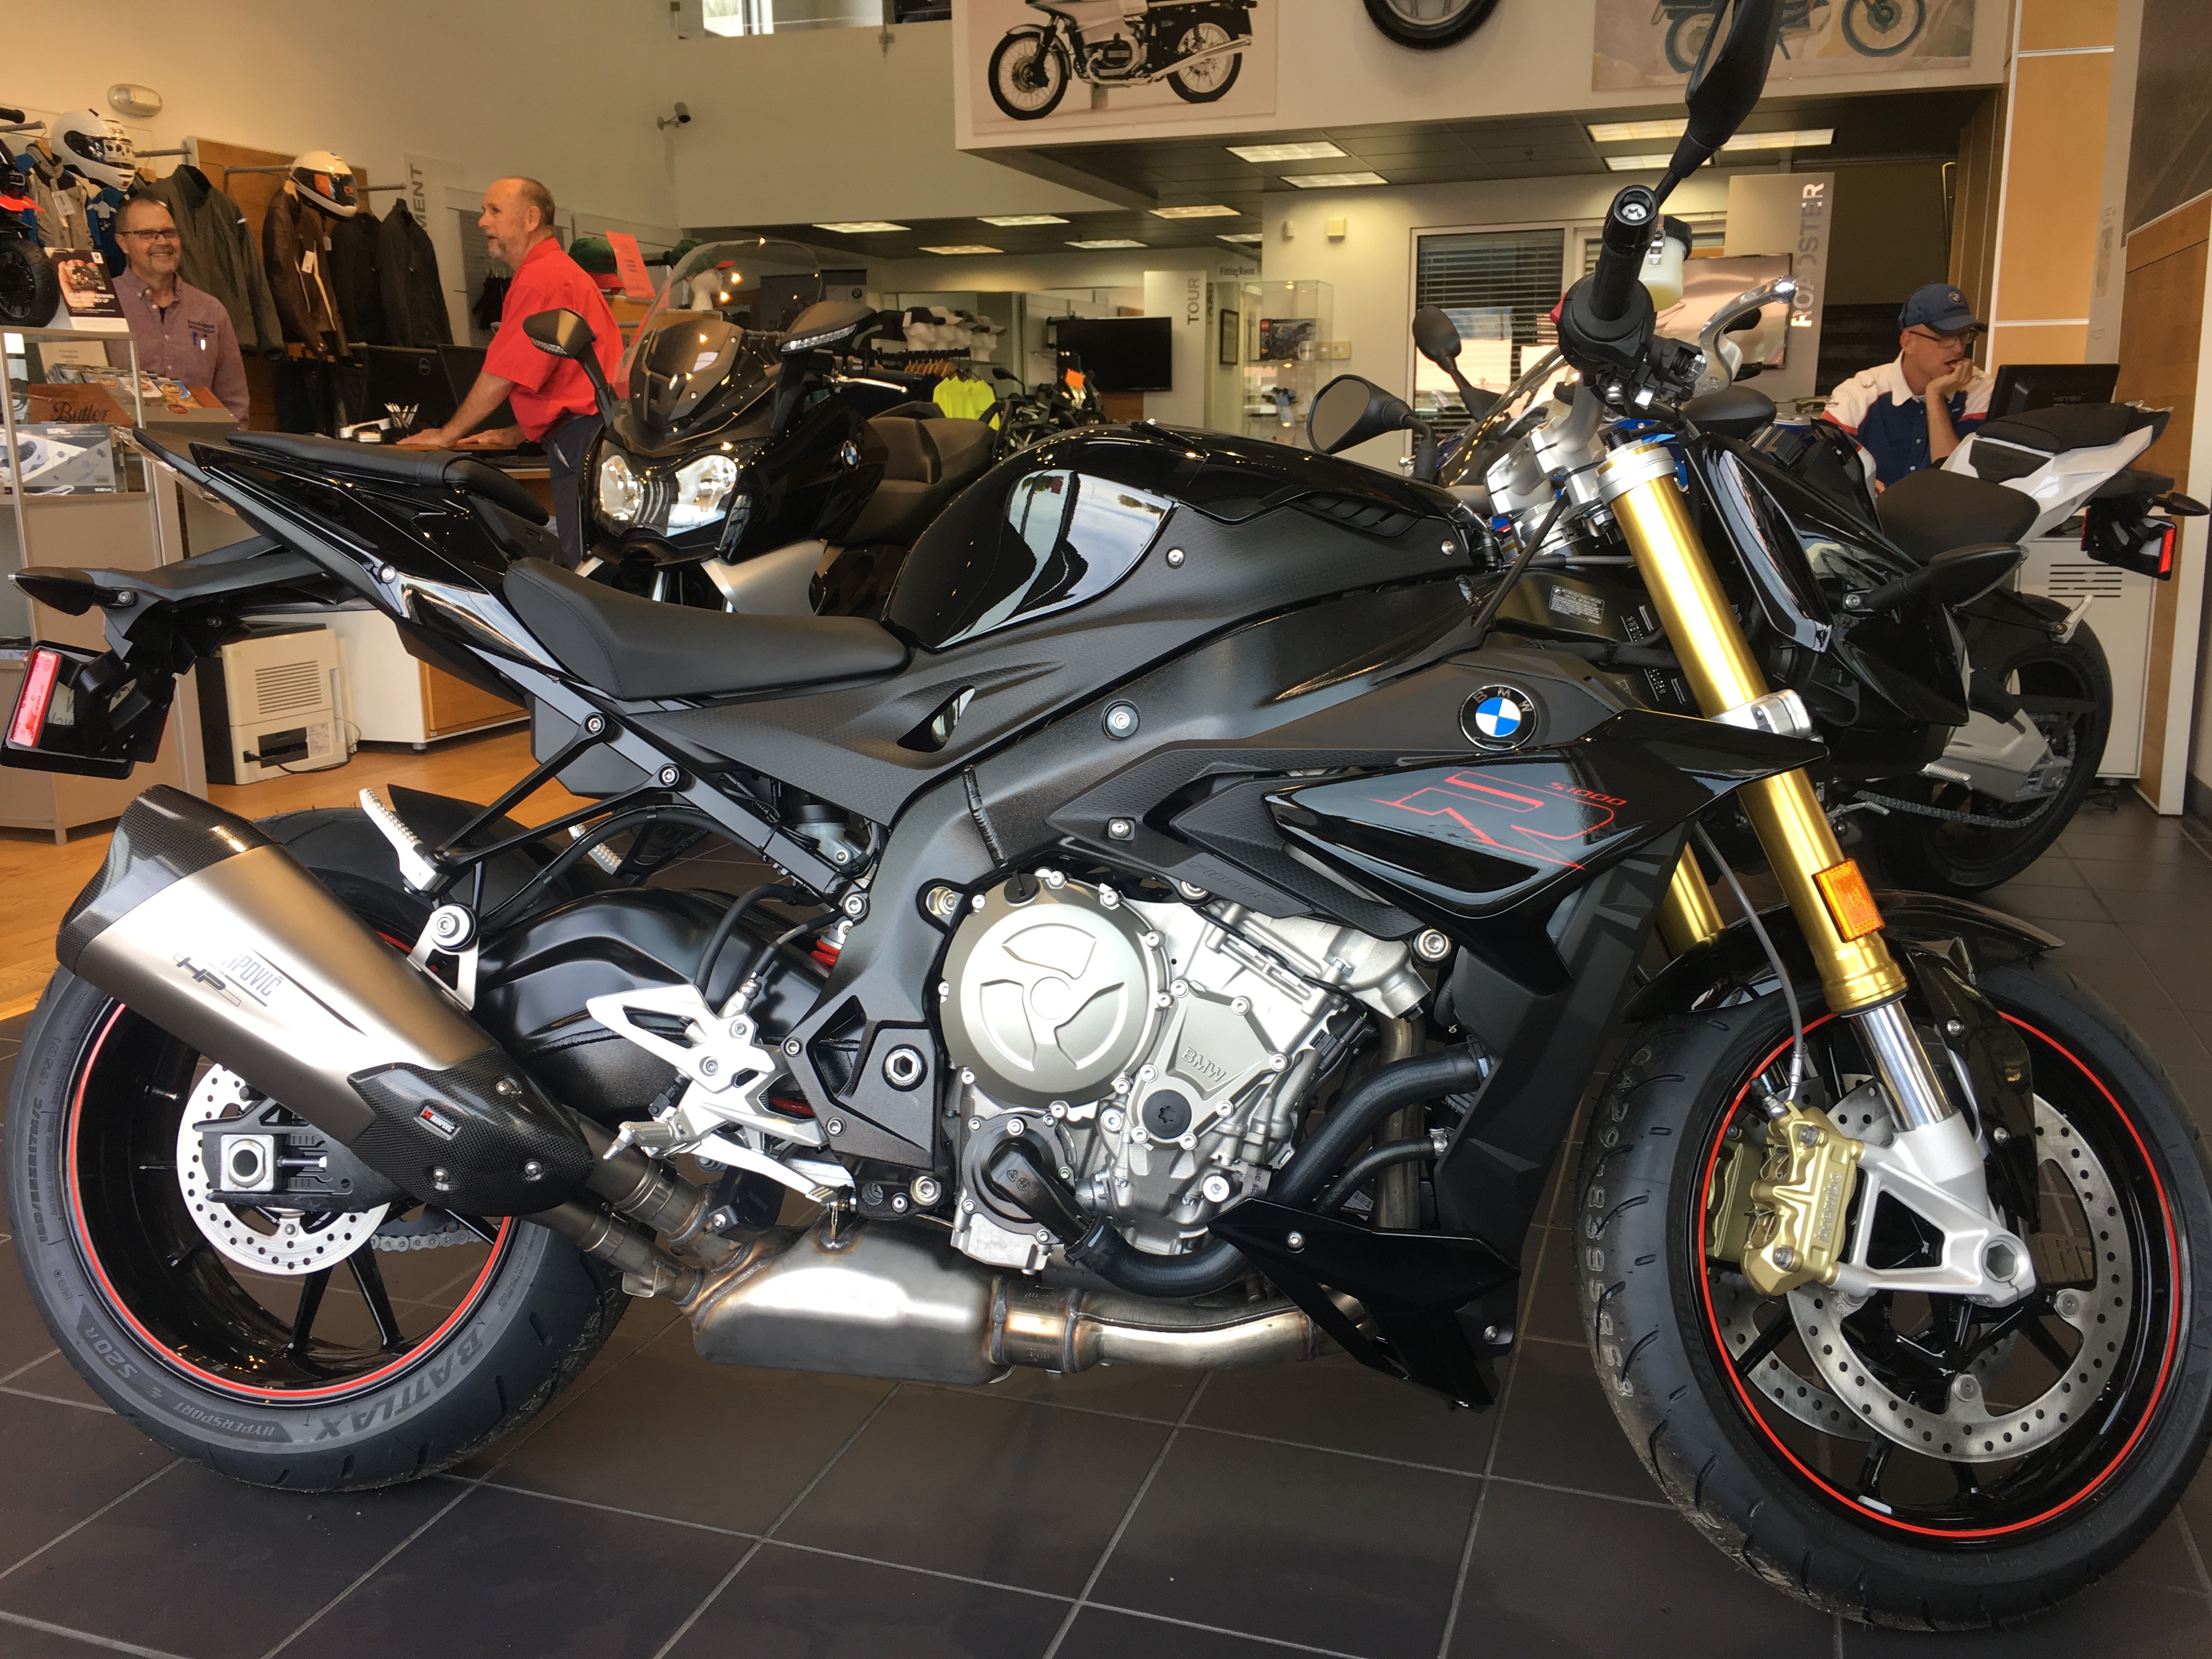 New Motorcycle Inventory - S1000R - Sandia BMW Motorcycles - Albuquerque, NM.